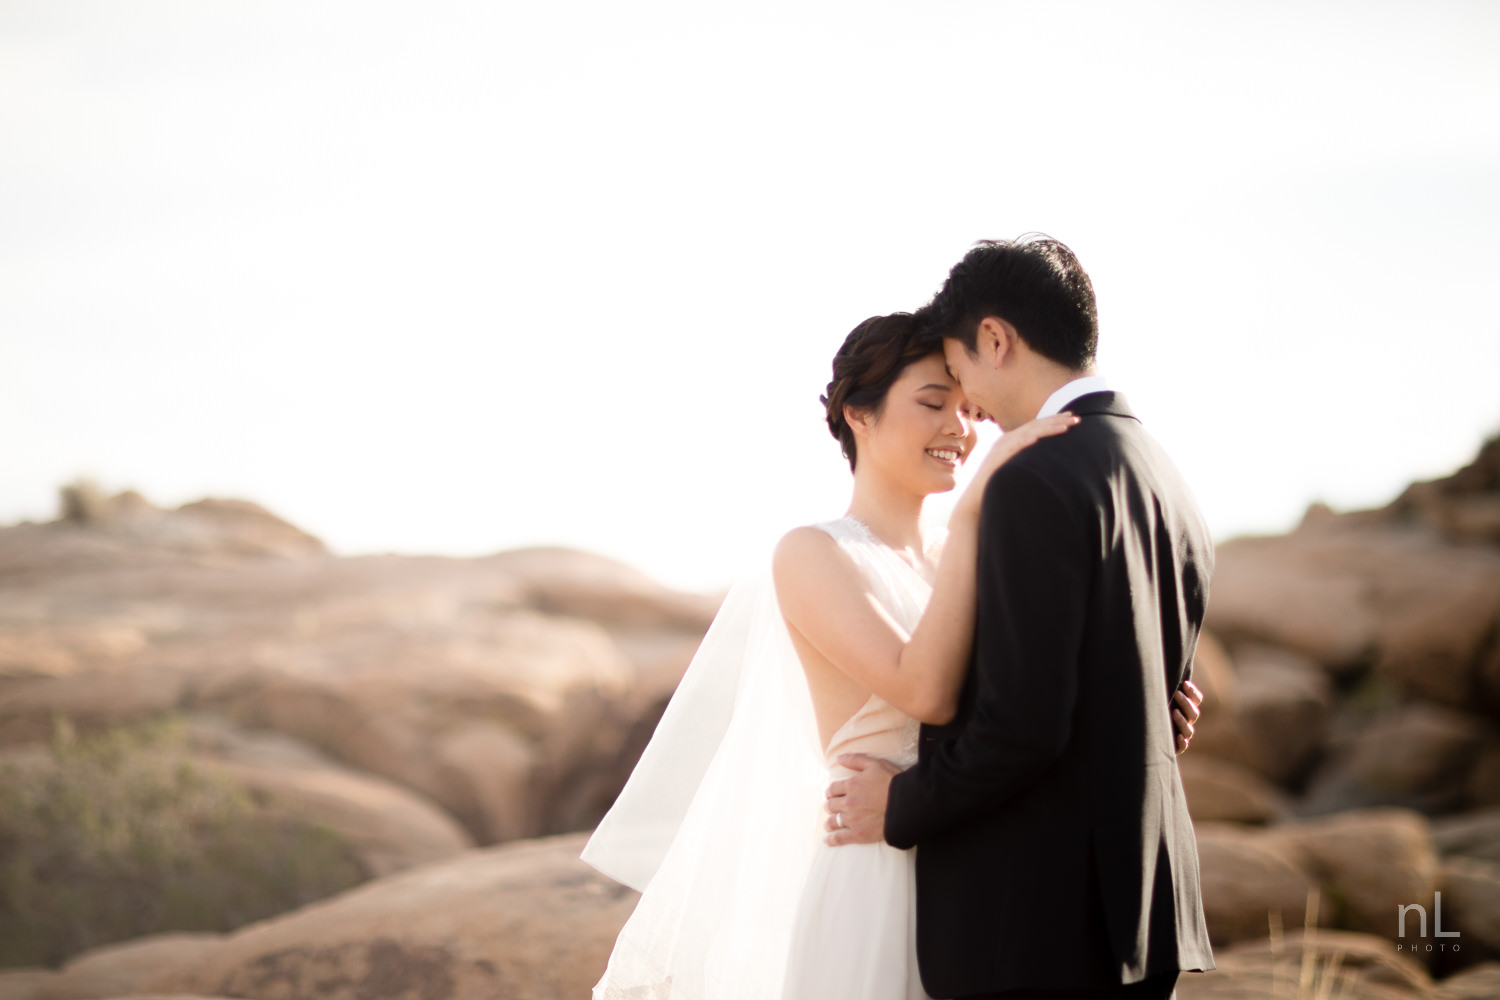 joshua-tree-engagement-wedding-elopement-photography-stylized-photoshoot-bride-and-groom-portrait-intimate-moment-on-rocks